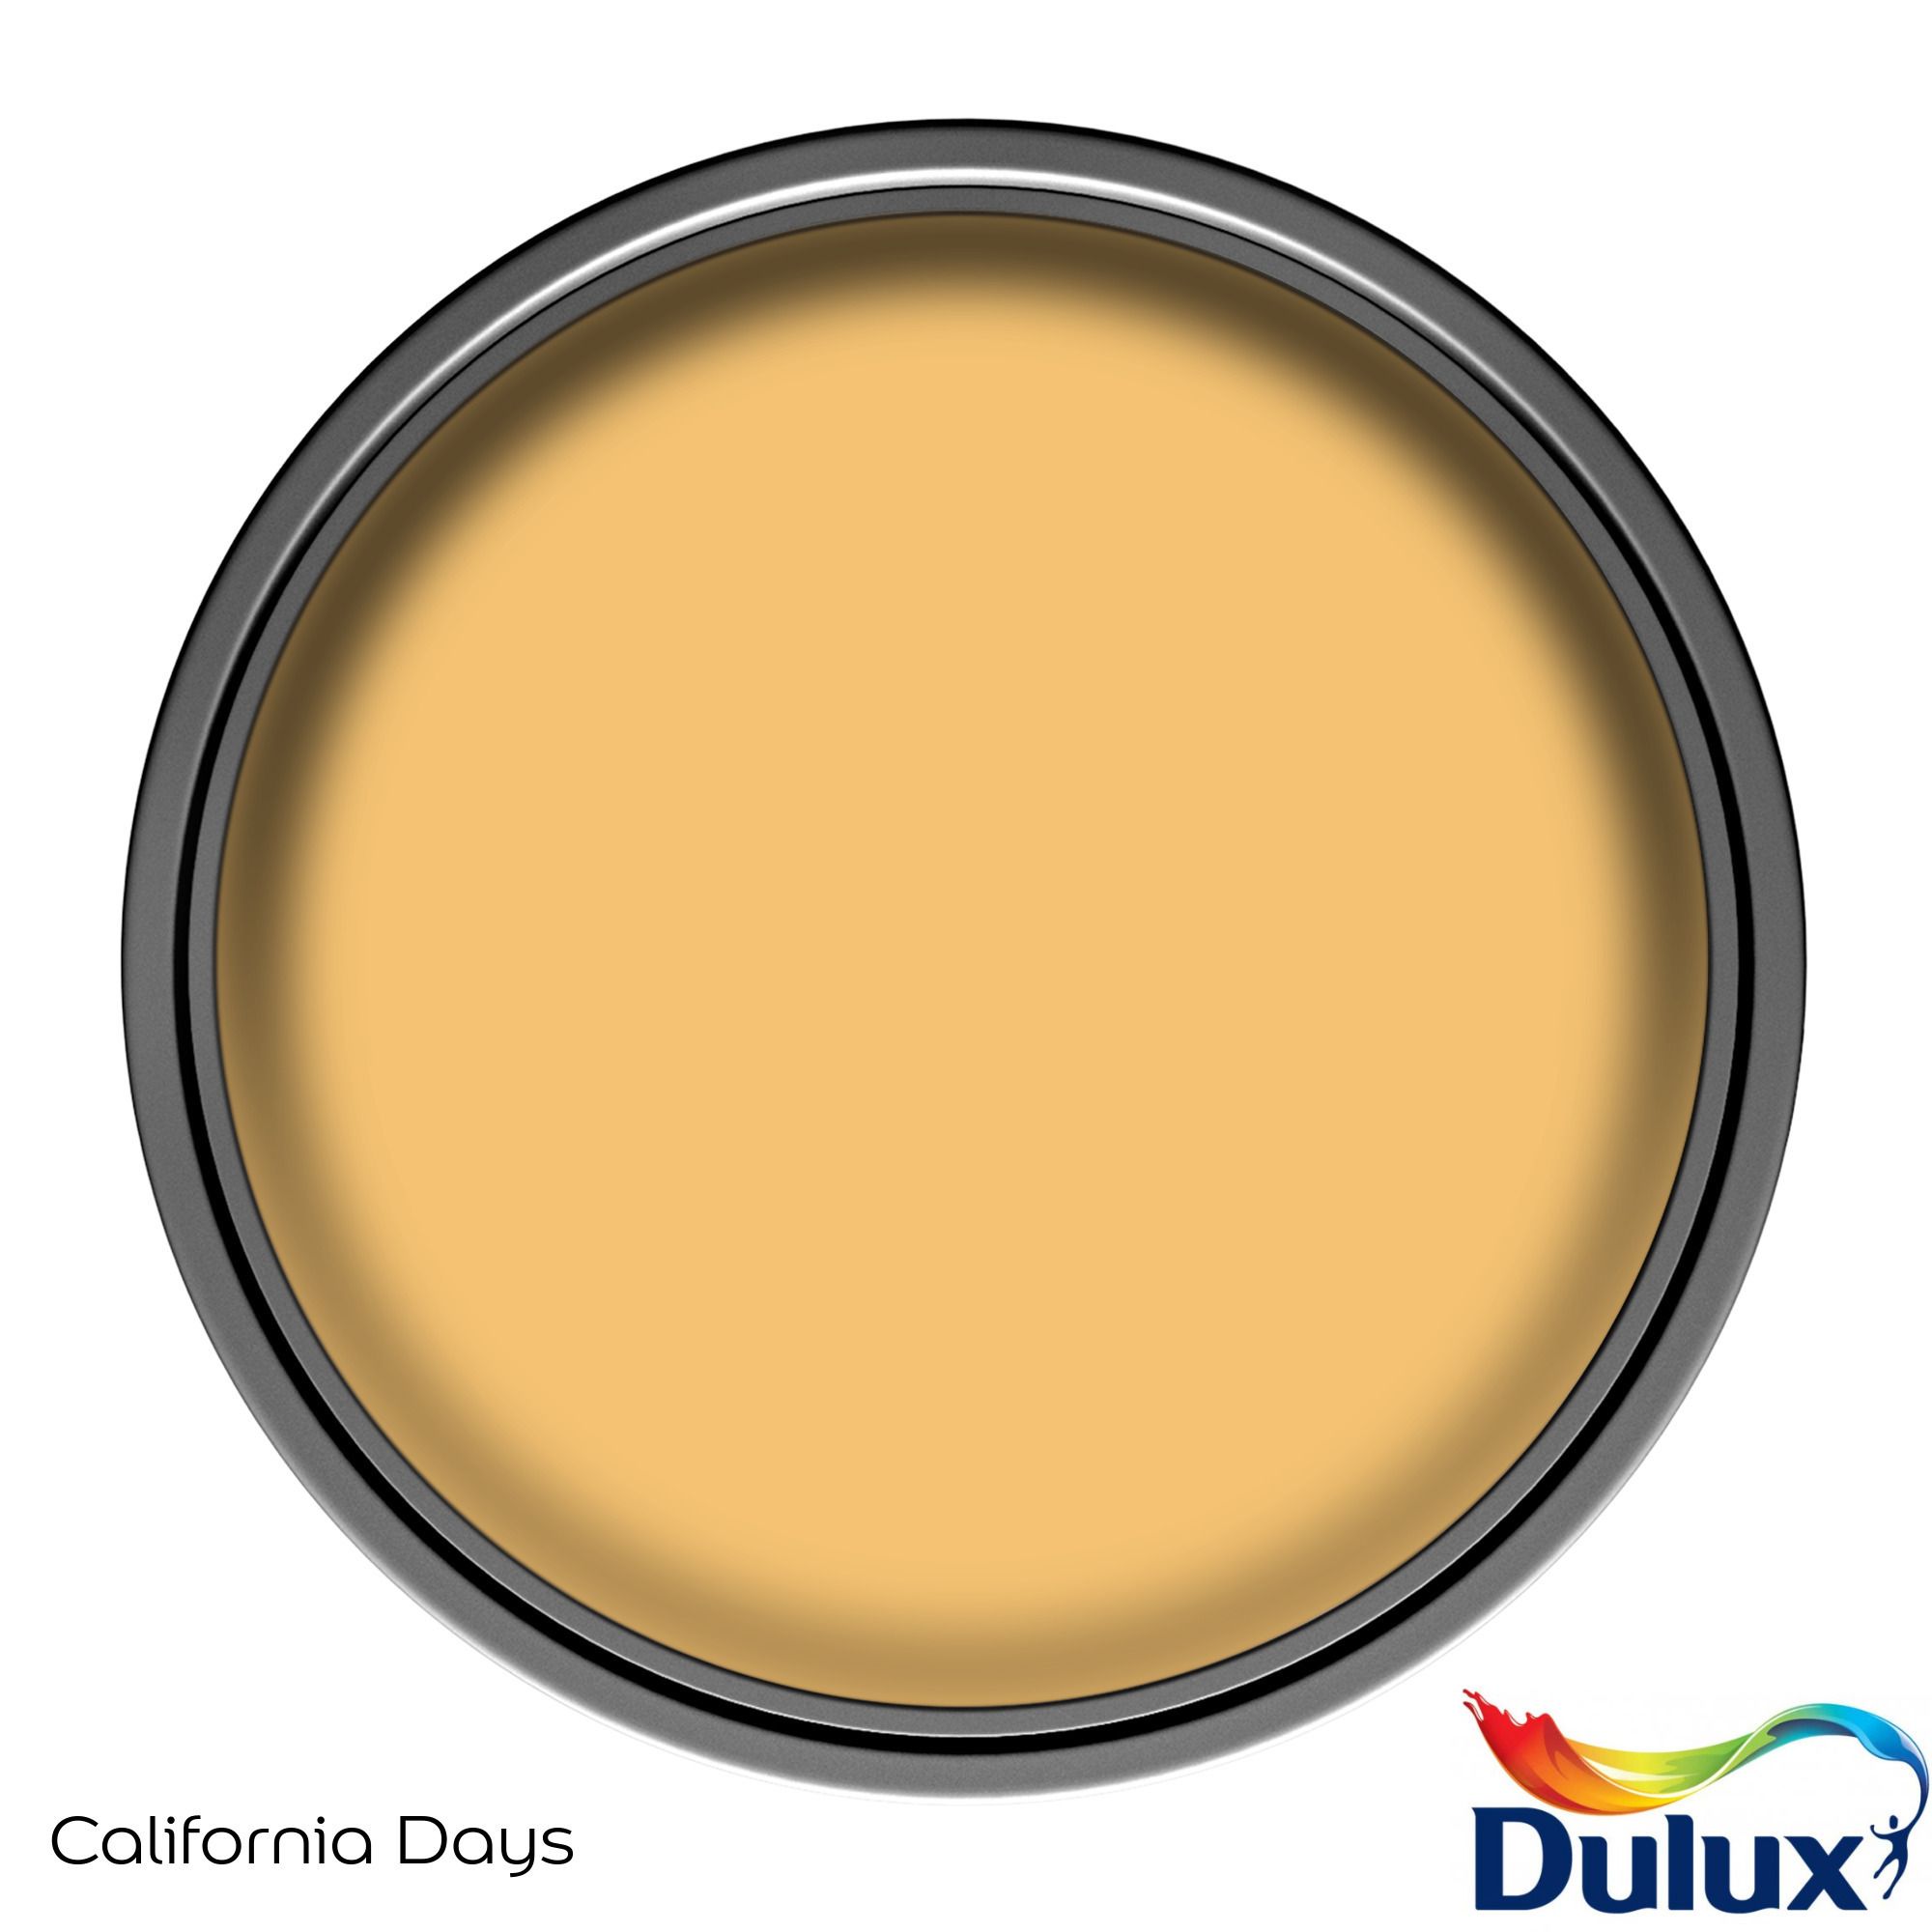 Dulux Easycare Bathroom California Days Soft sheen Wall paint, 30ml